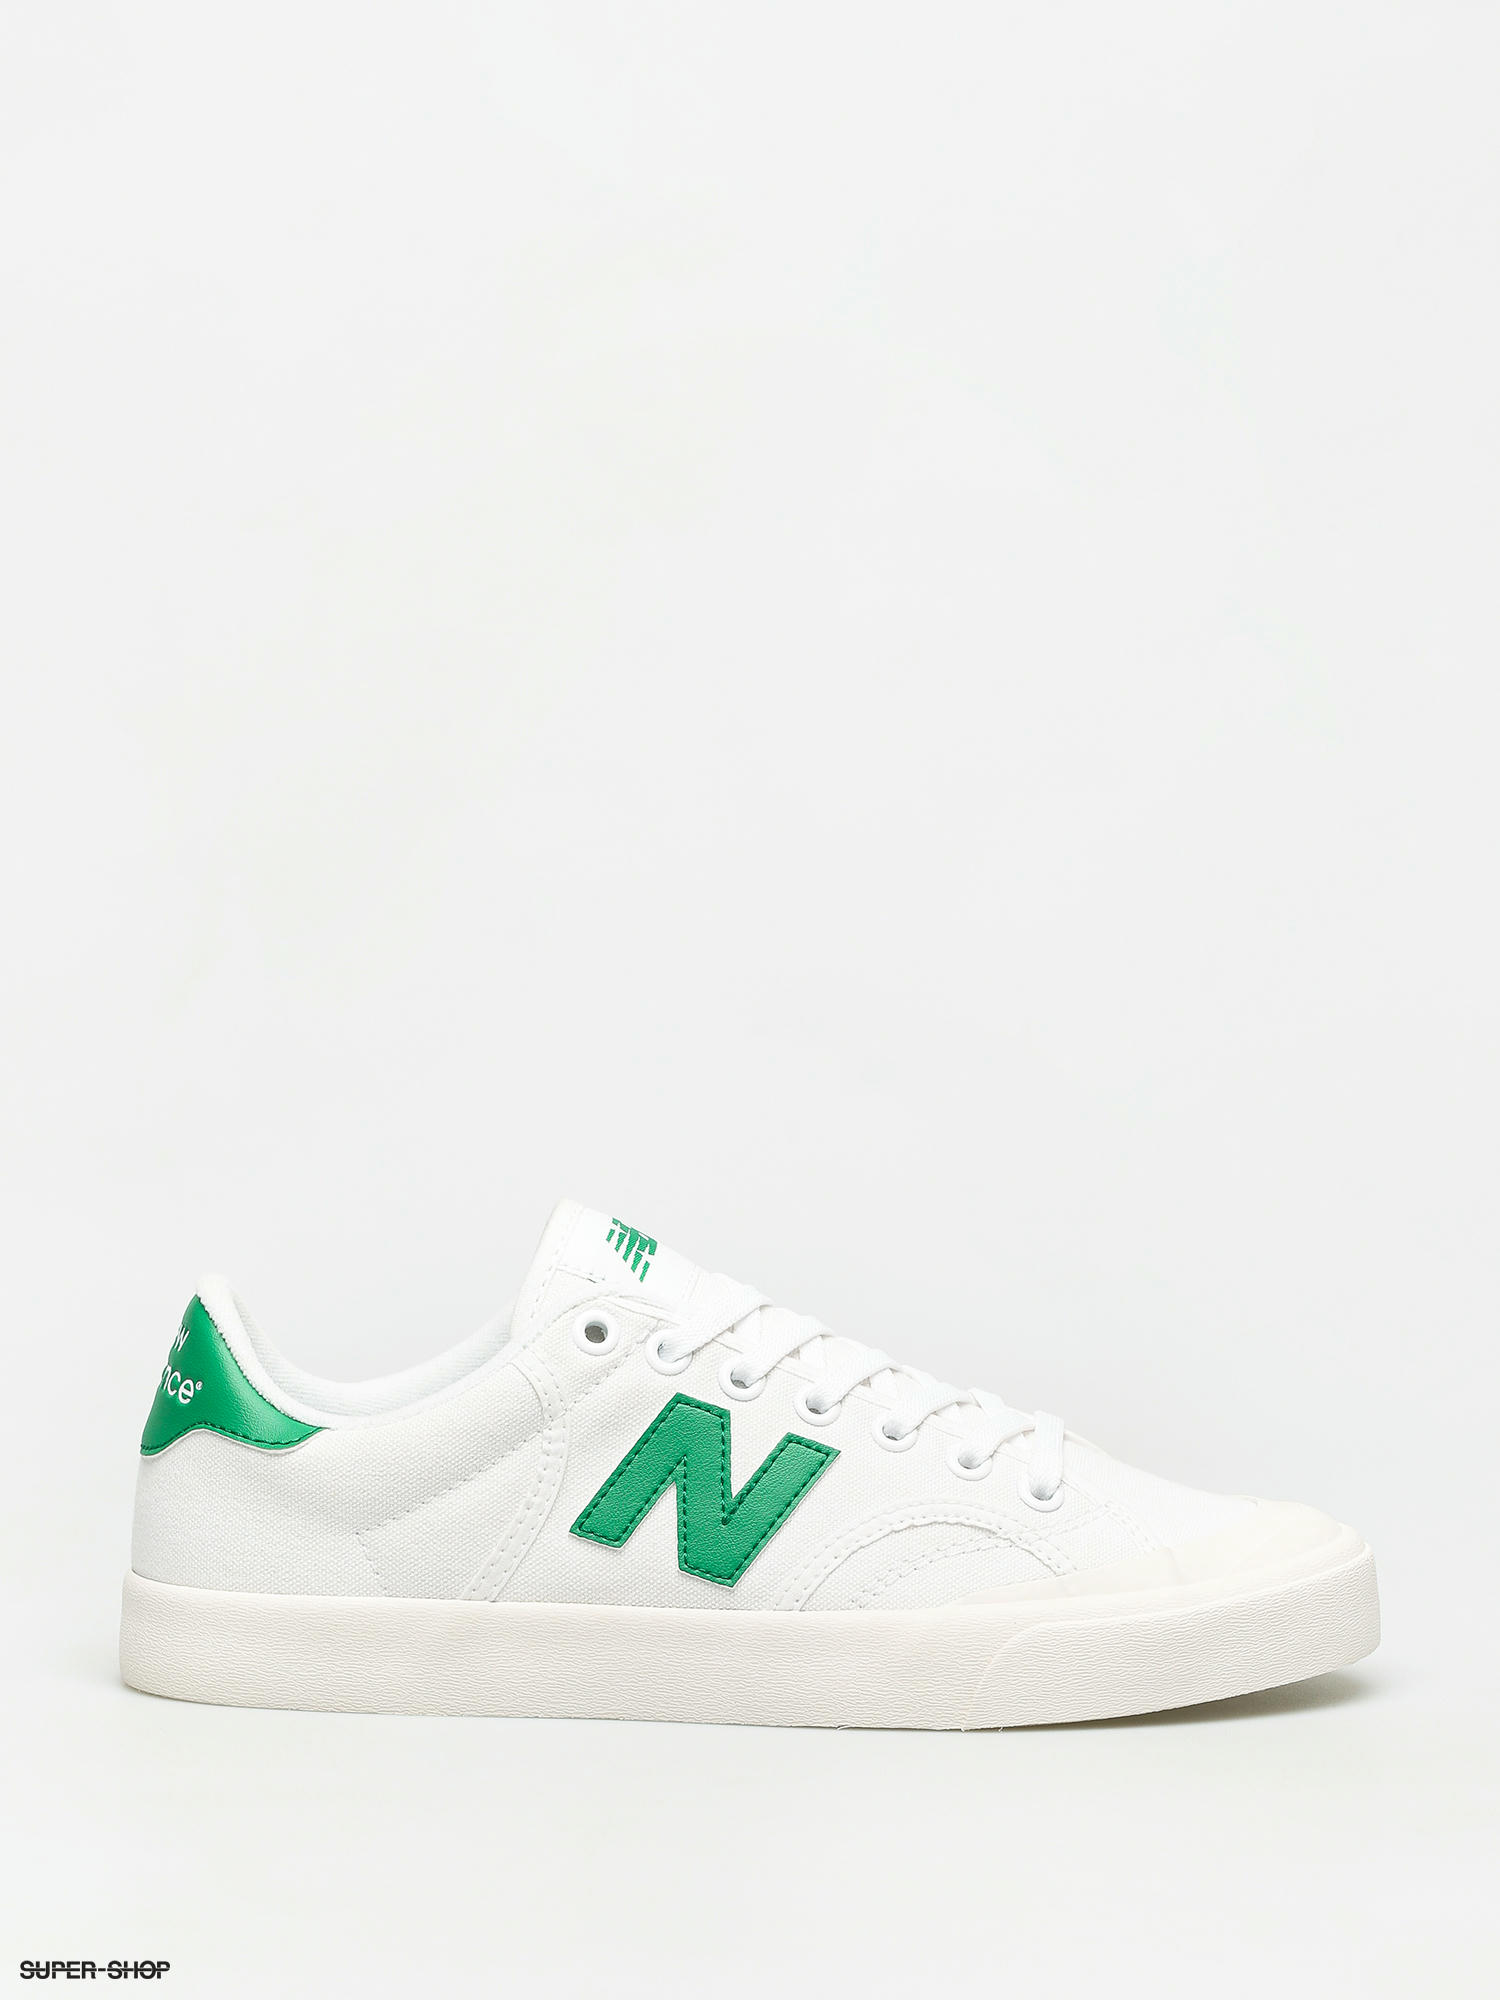 New Balance PROCT Shoes (white/green)